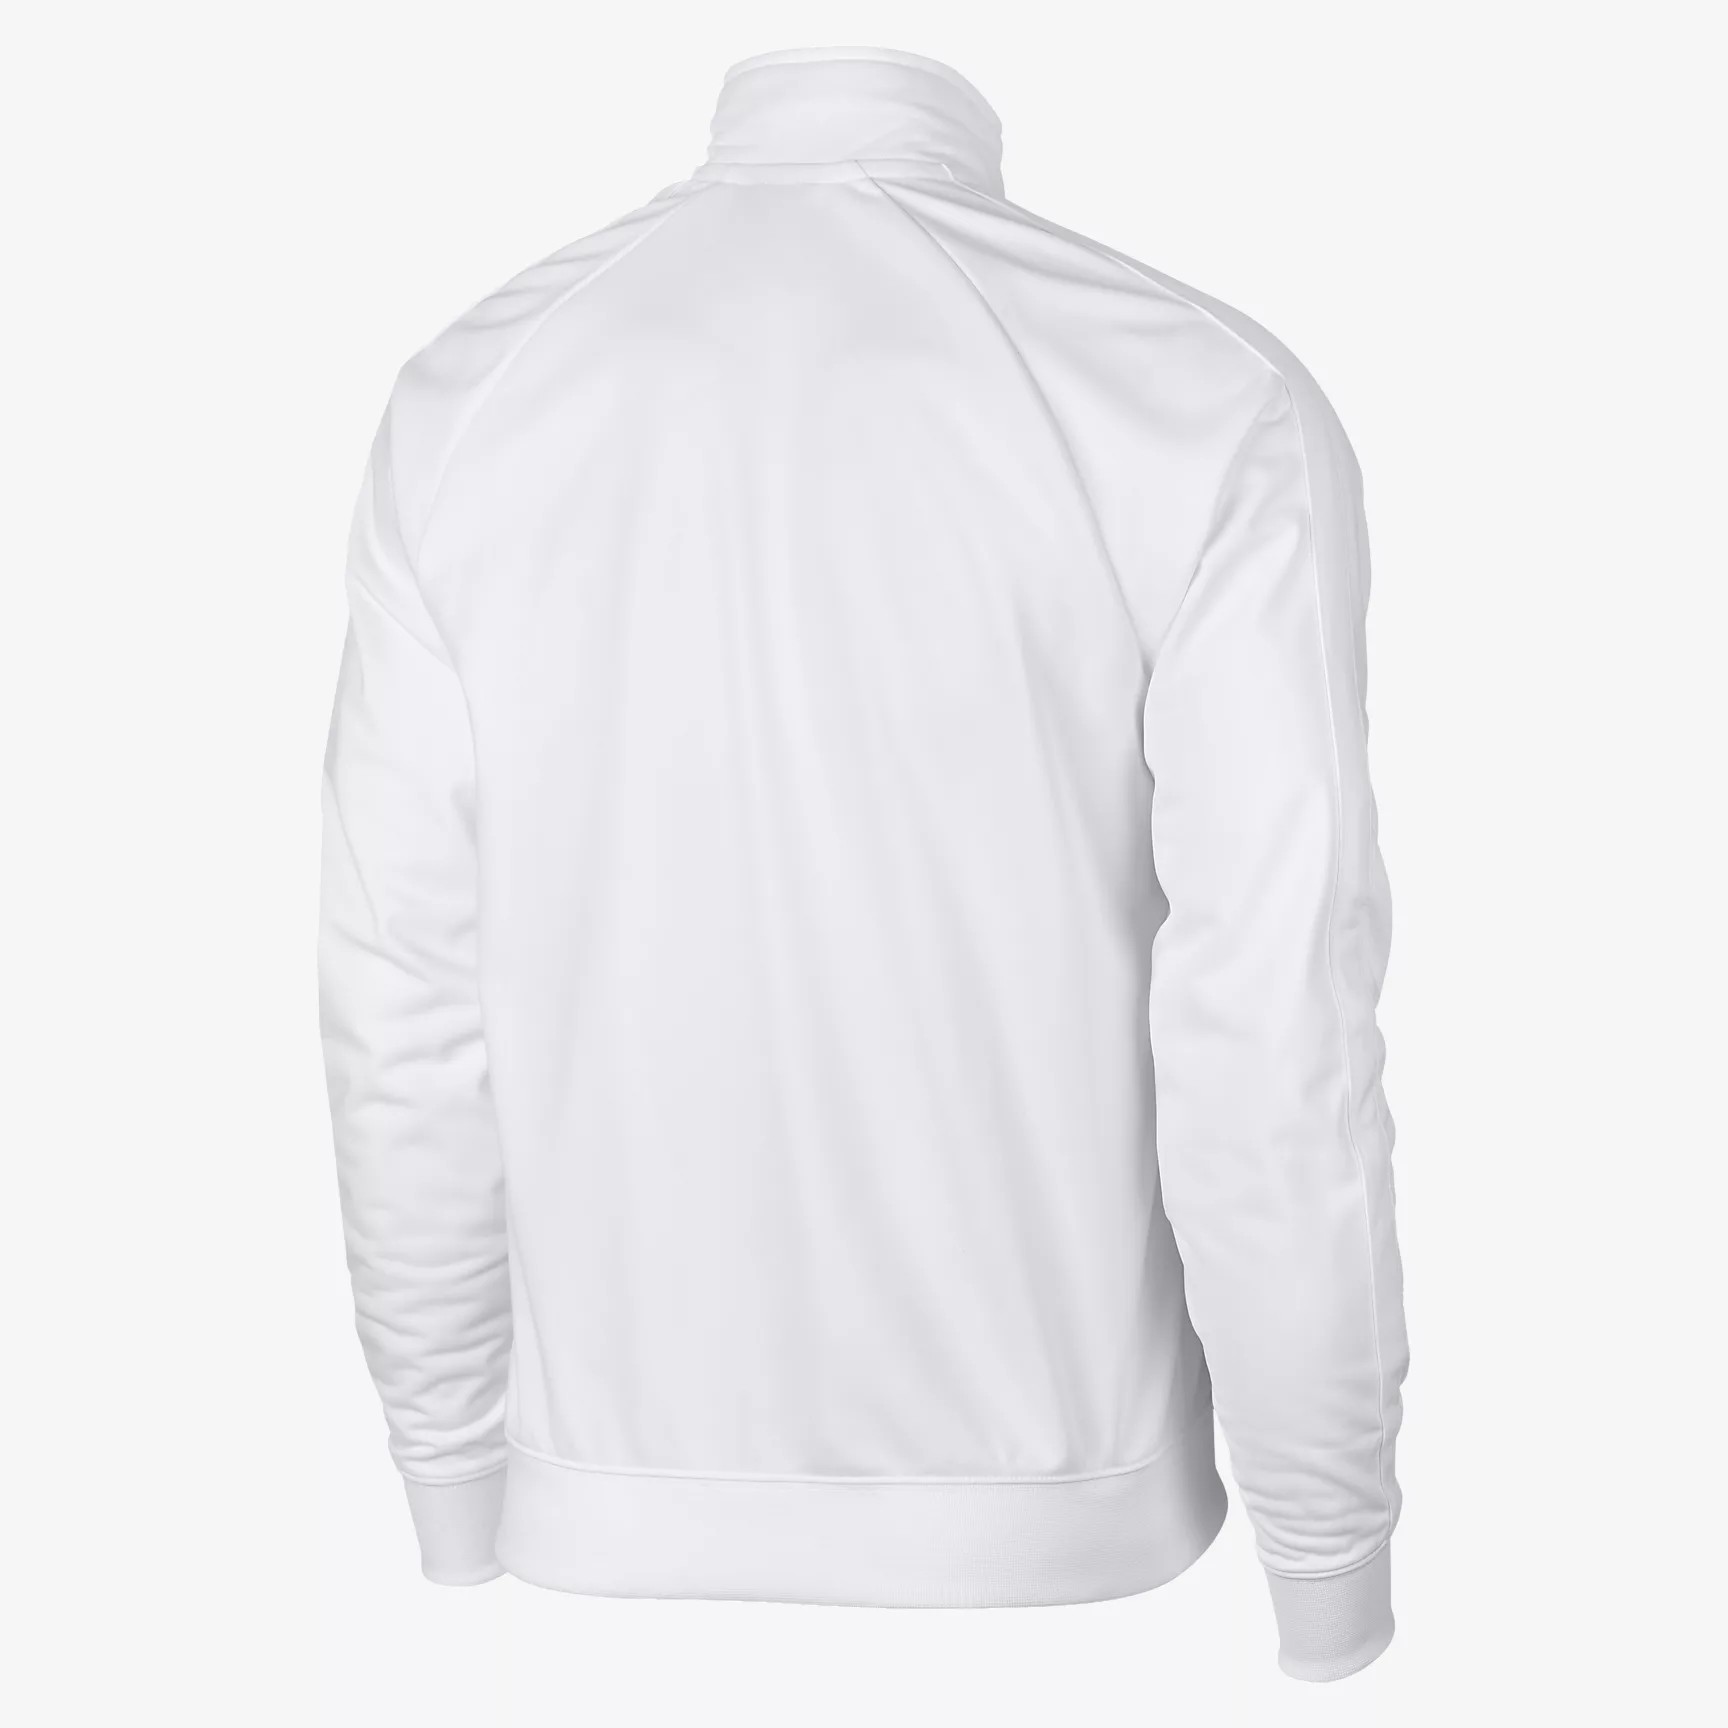 Nike England 2018 Track Jacket - White / Sport Royal - Football Shirt ...